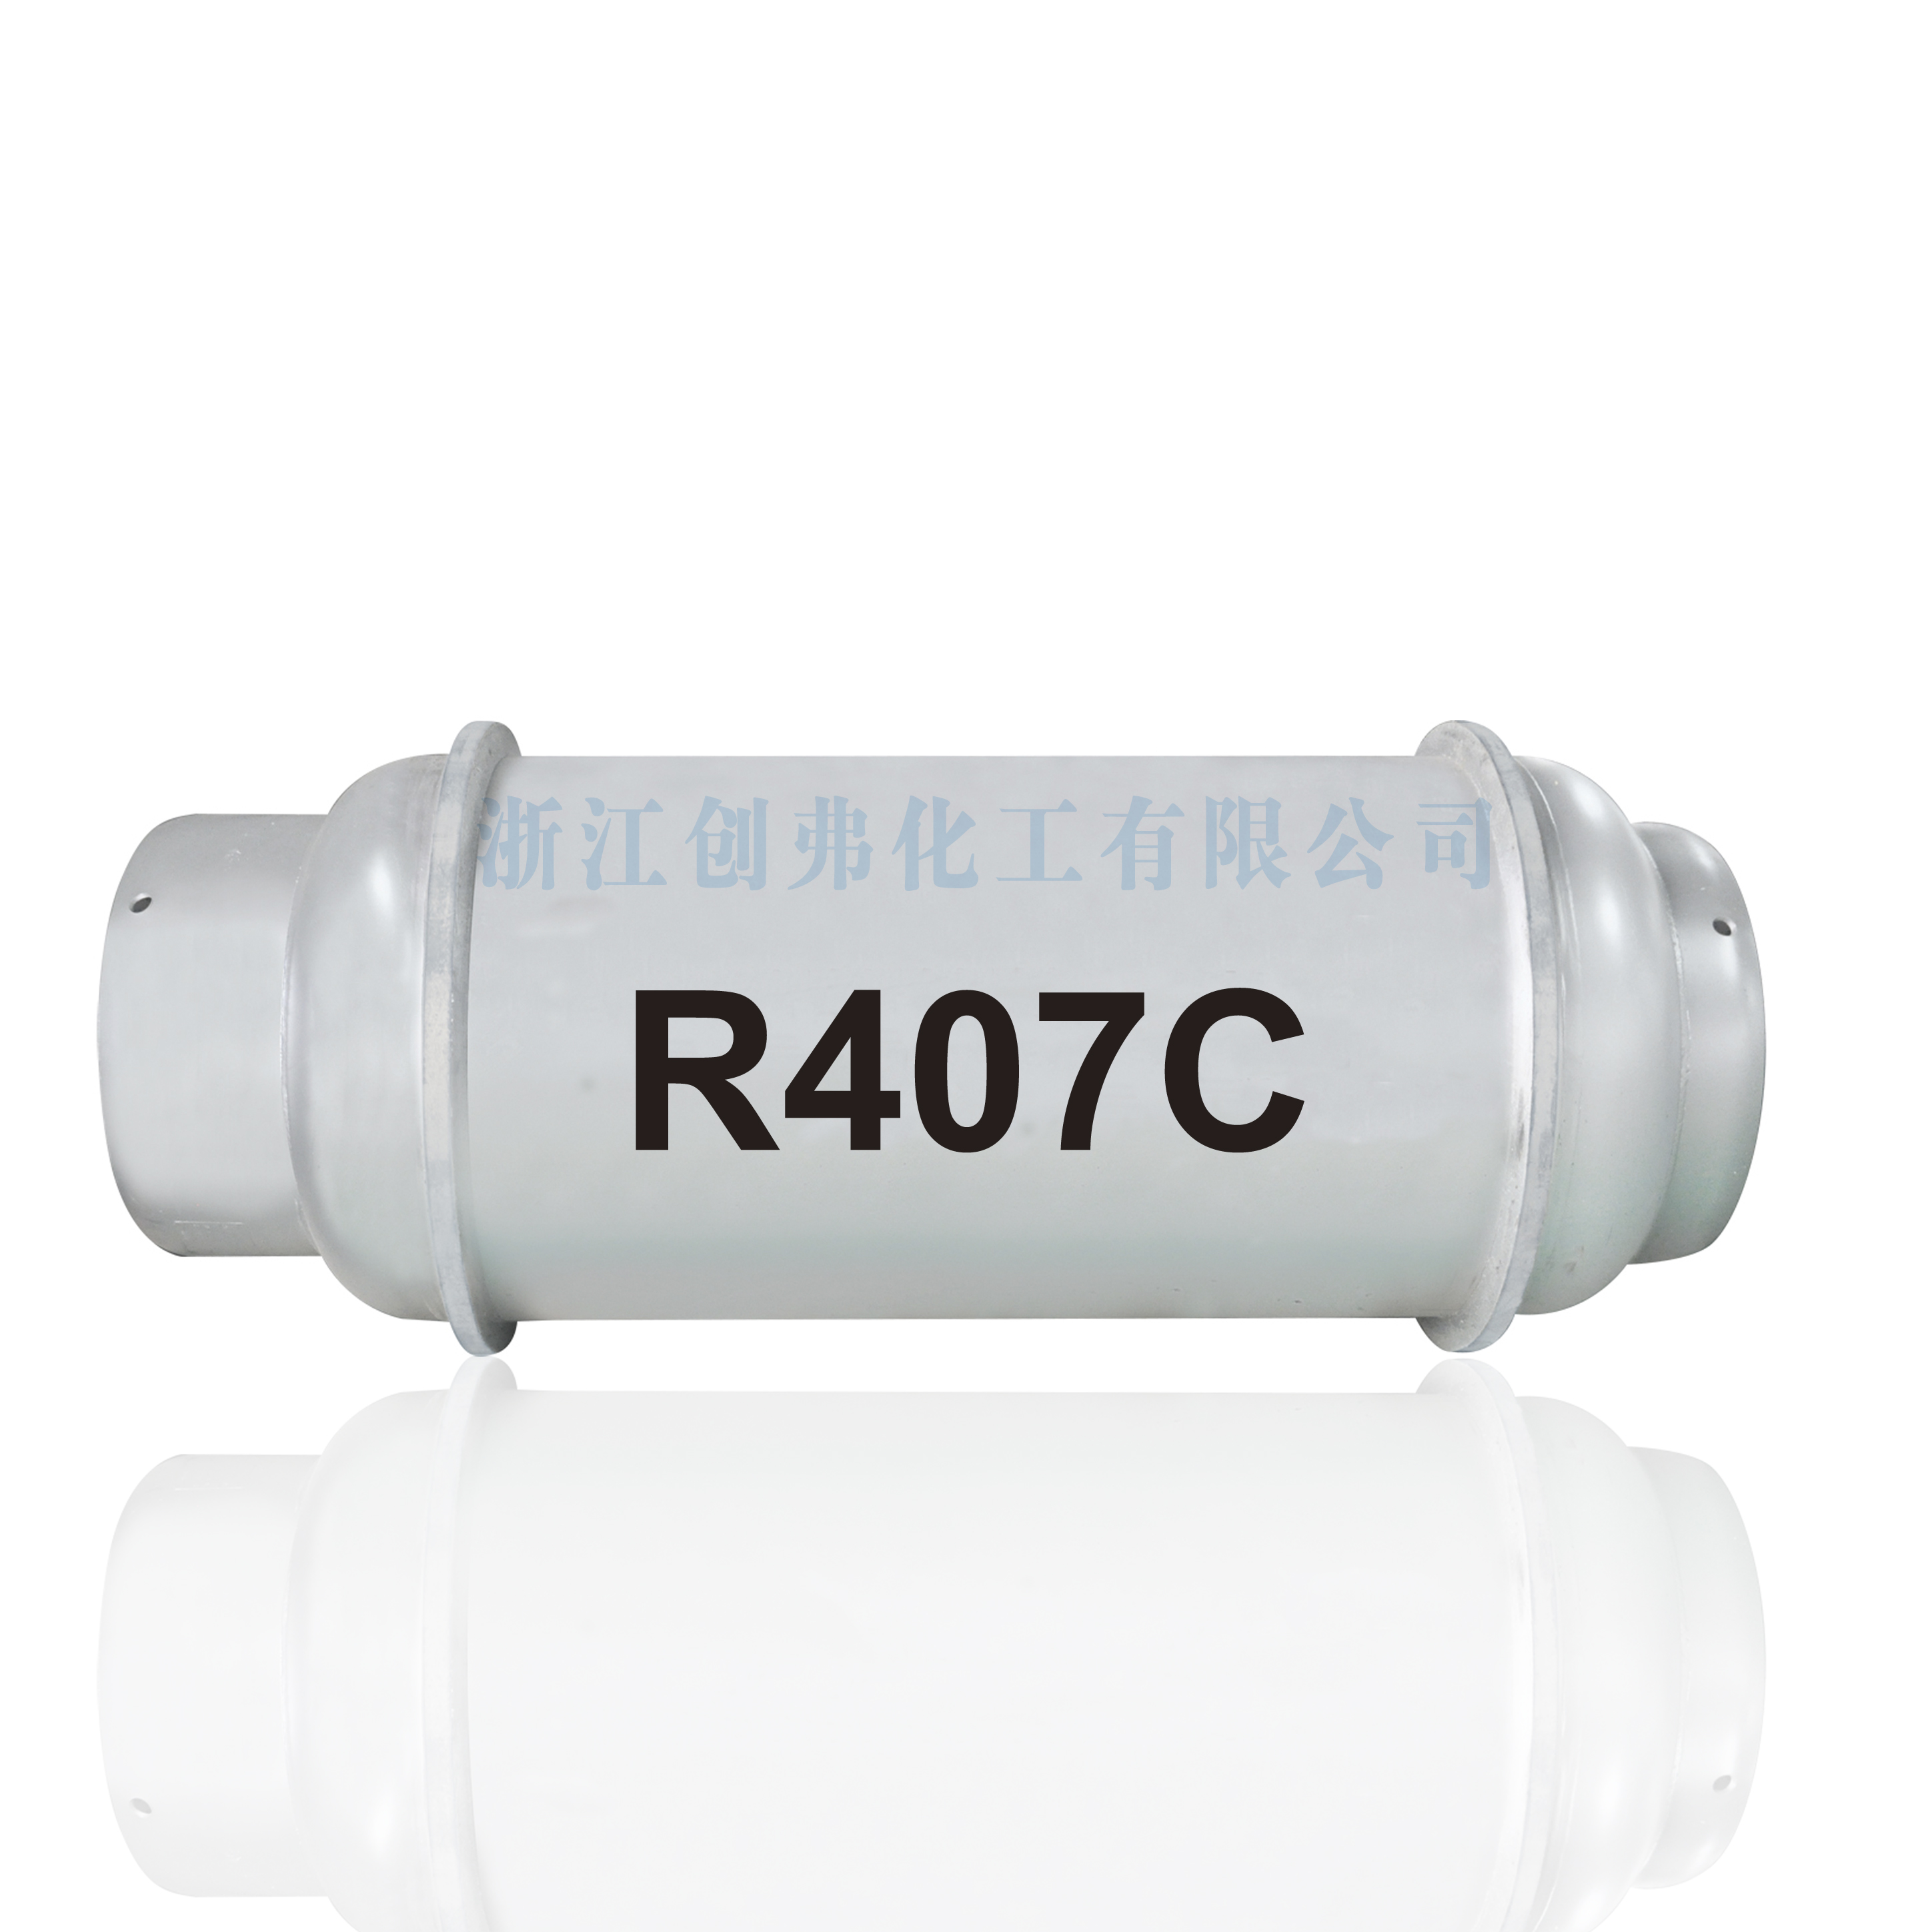 R407C制冷剂